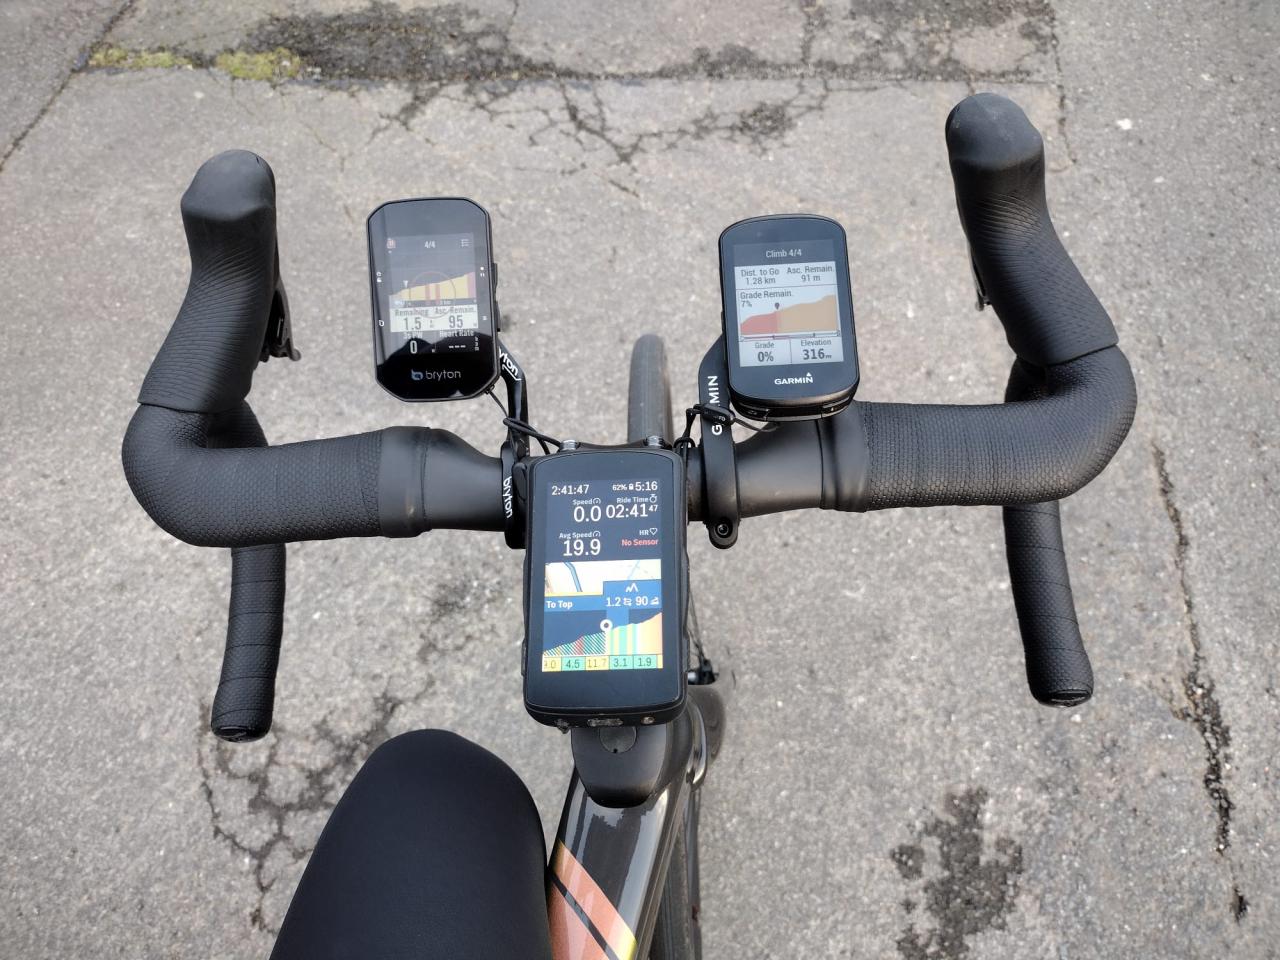 Garmin Edge Touring GPS Cycle Computer